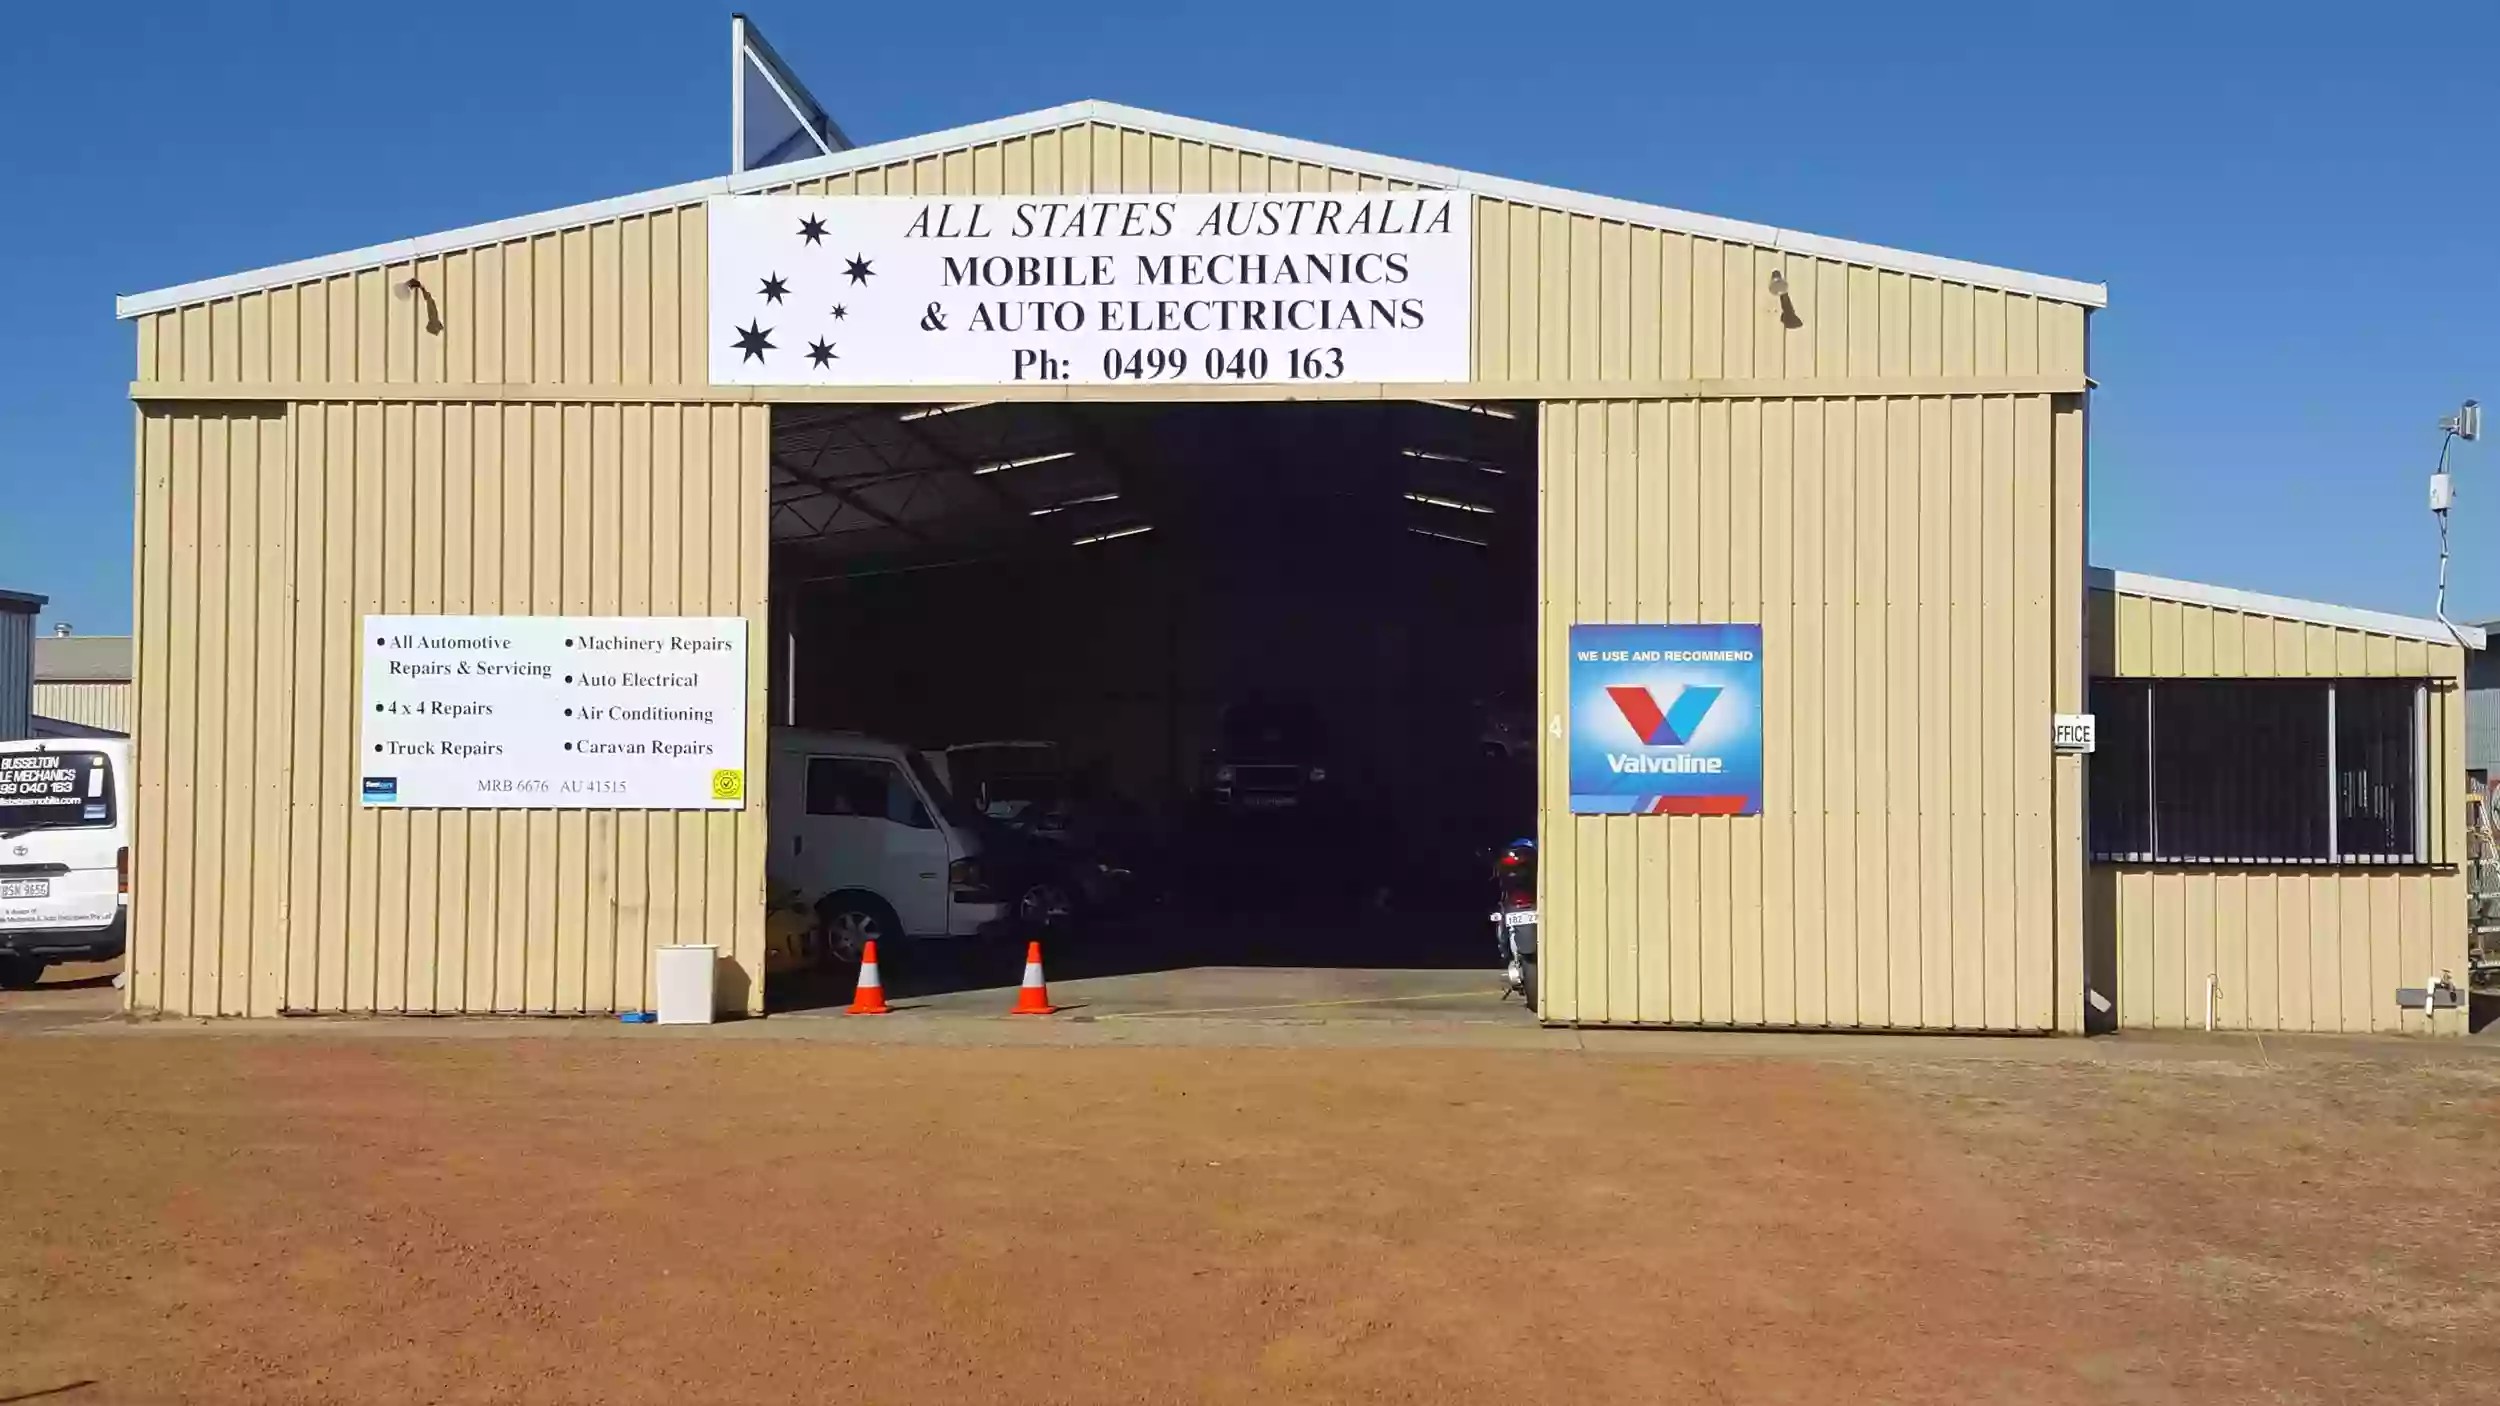 All States Australia Mobile Mechanics and Auto Electricians Perth